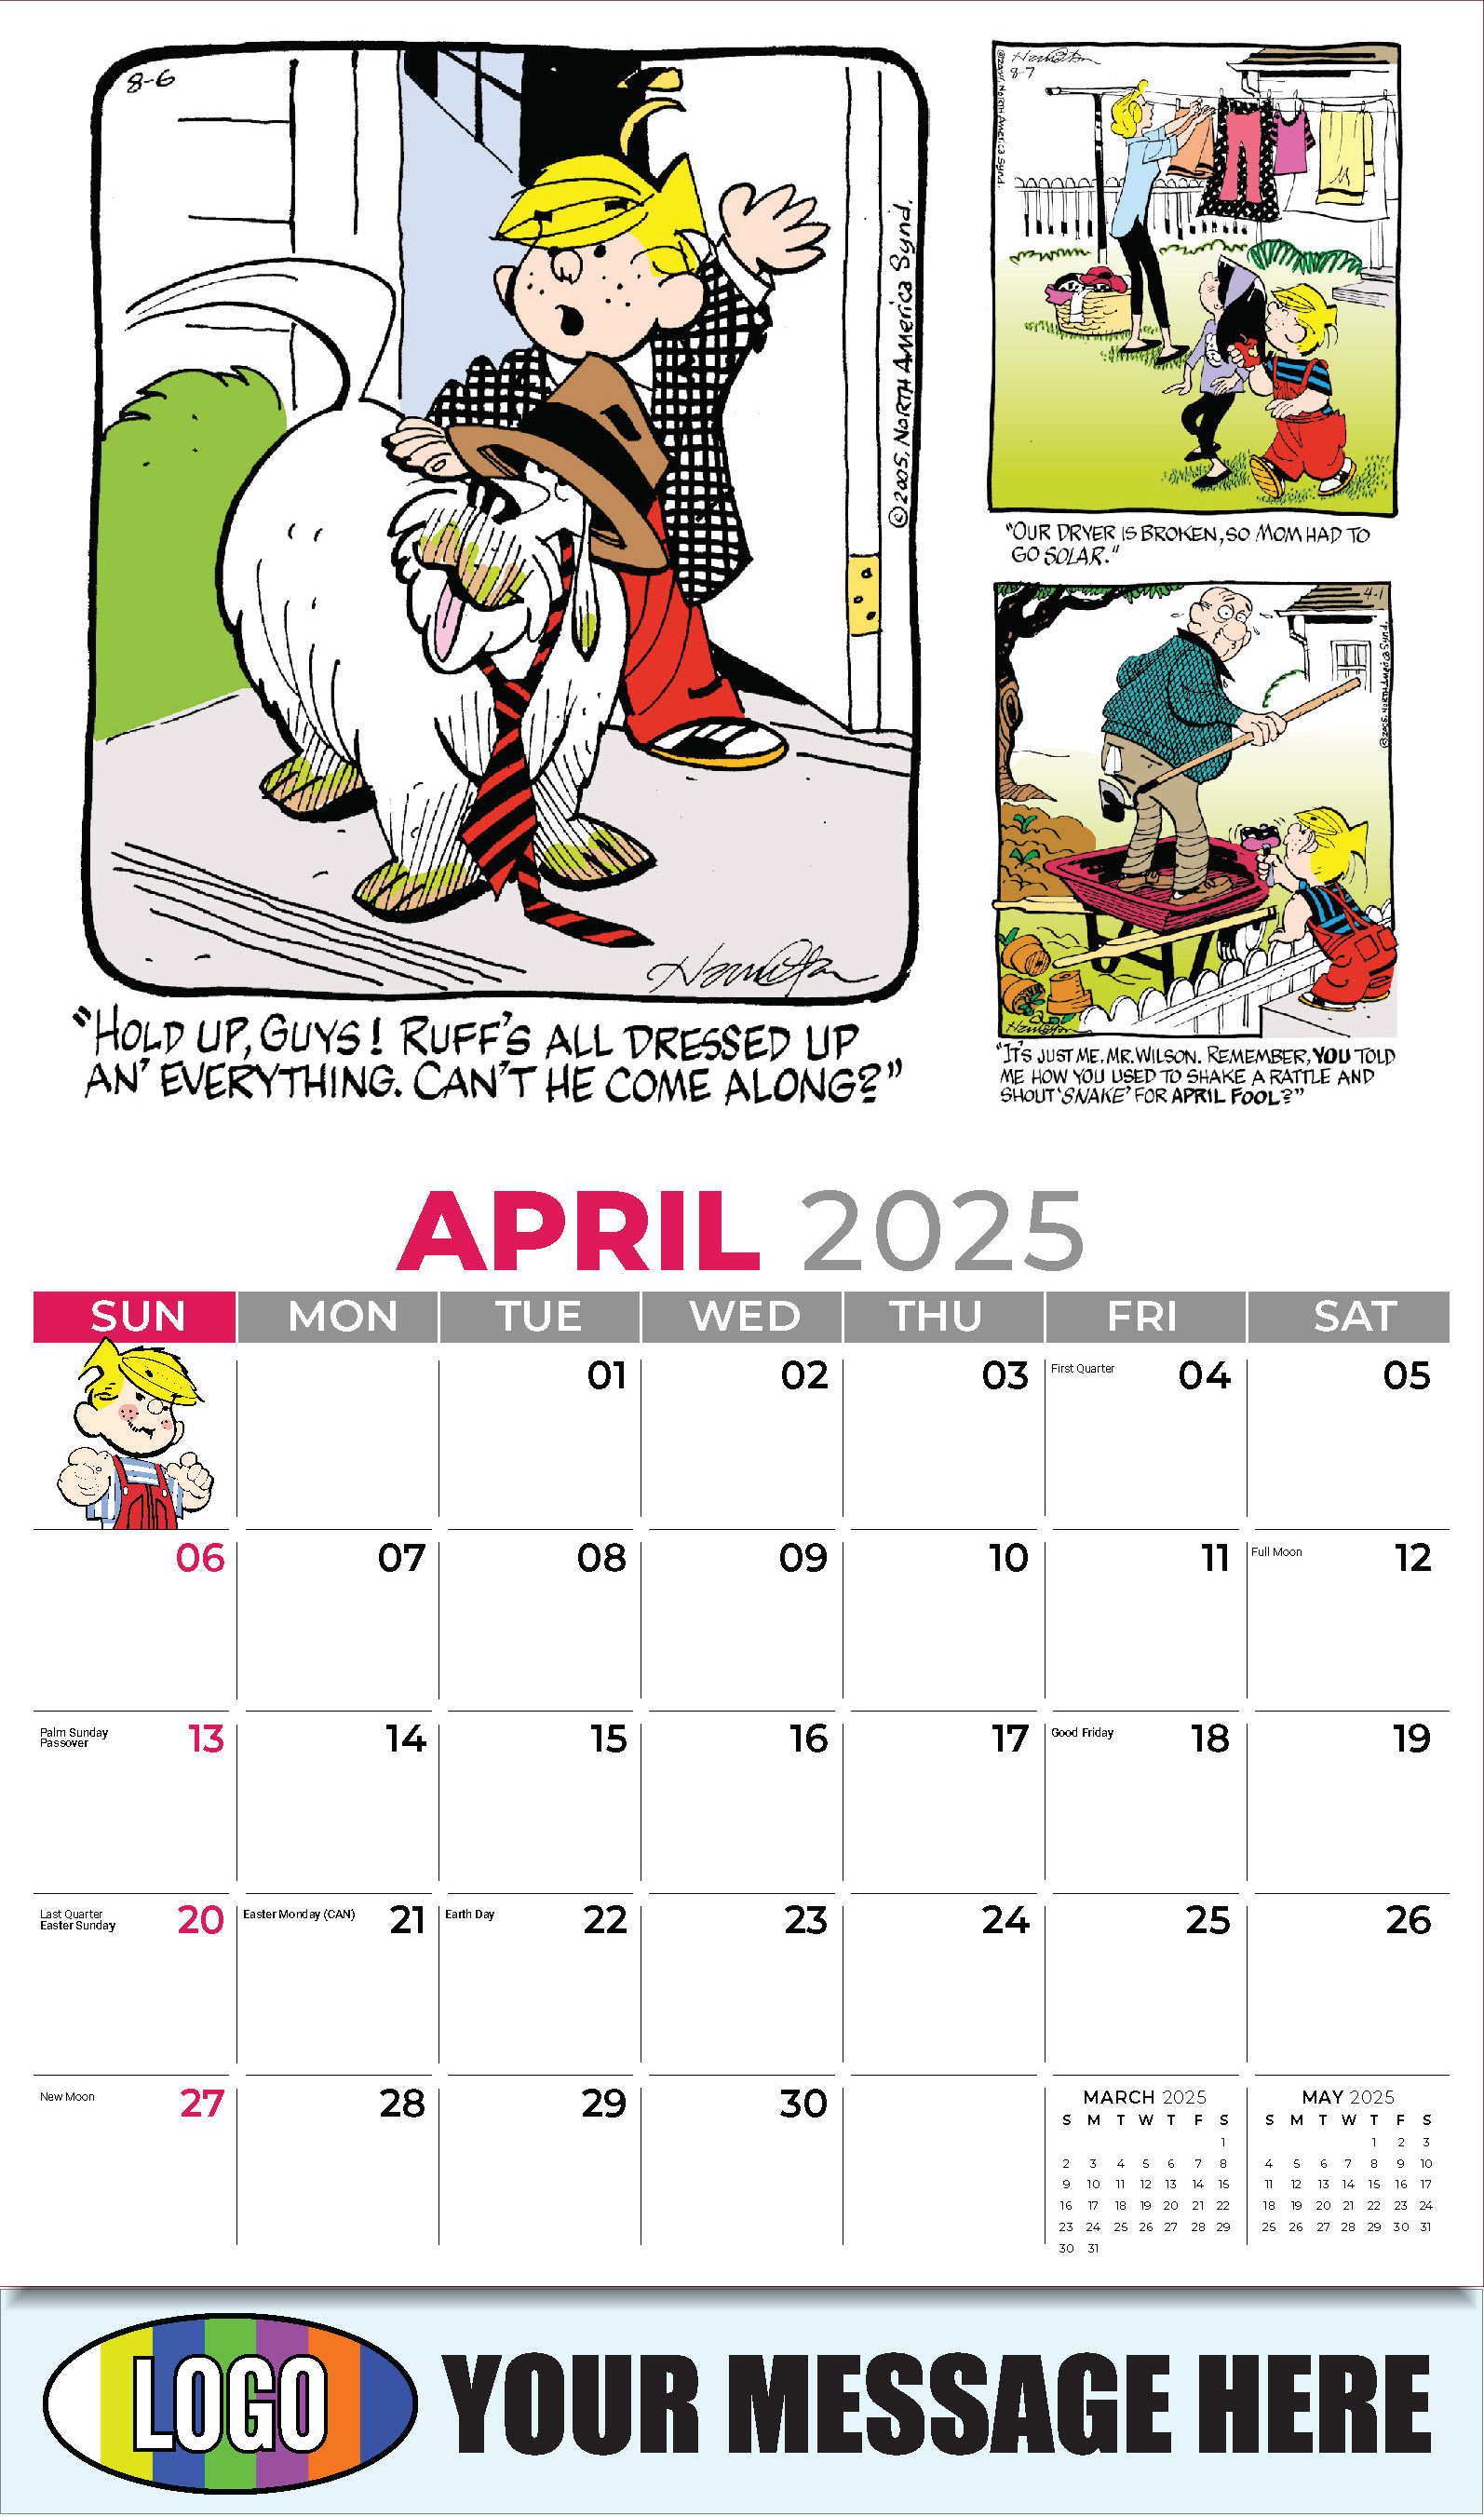 Dennis the Menace 2025 Business Promotional Wall Calendar - April